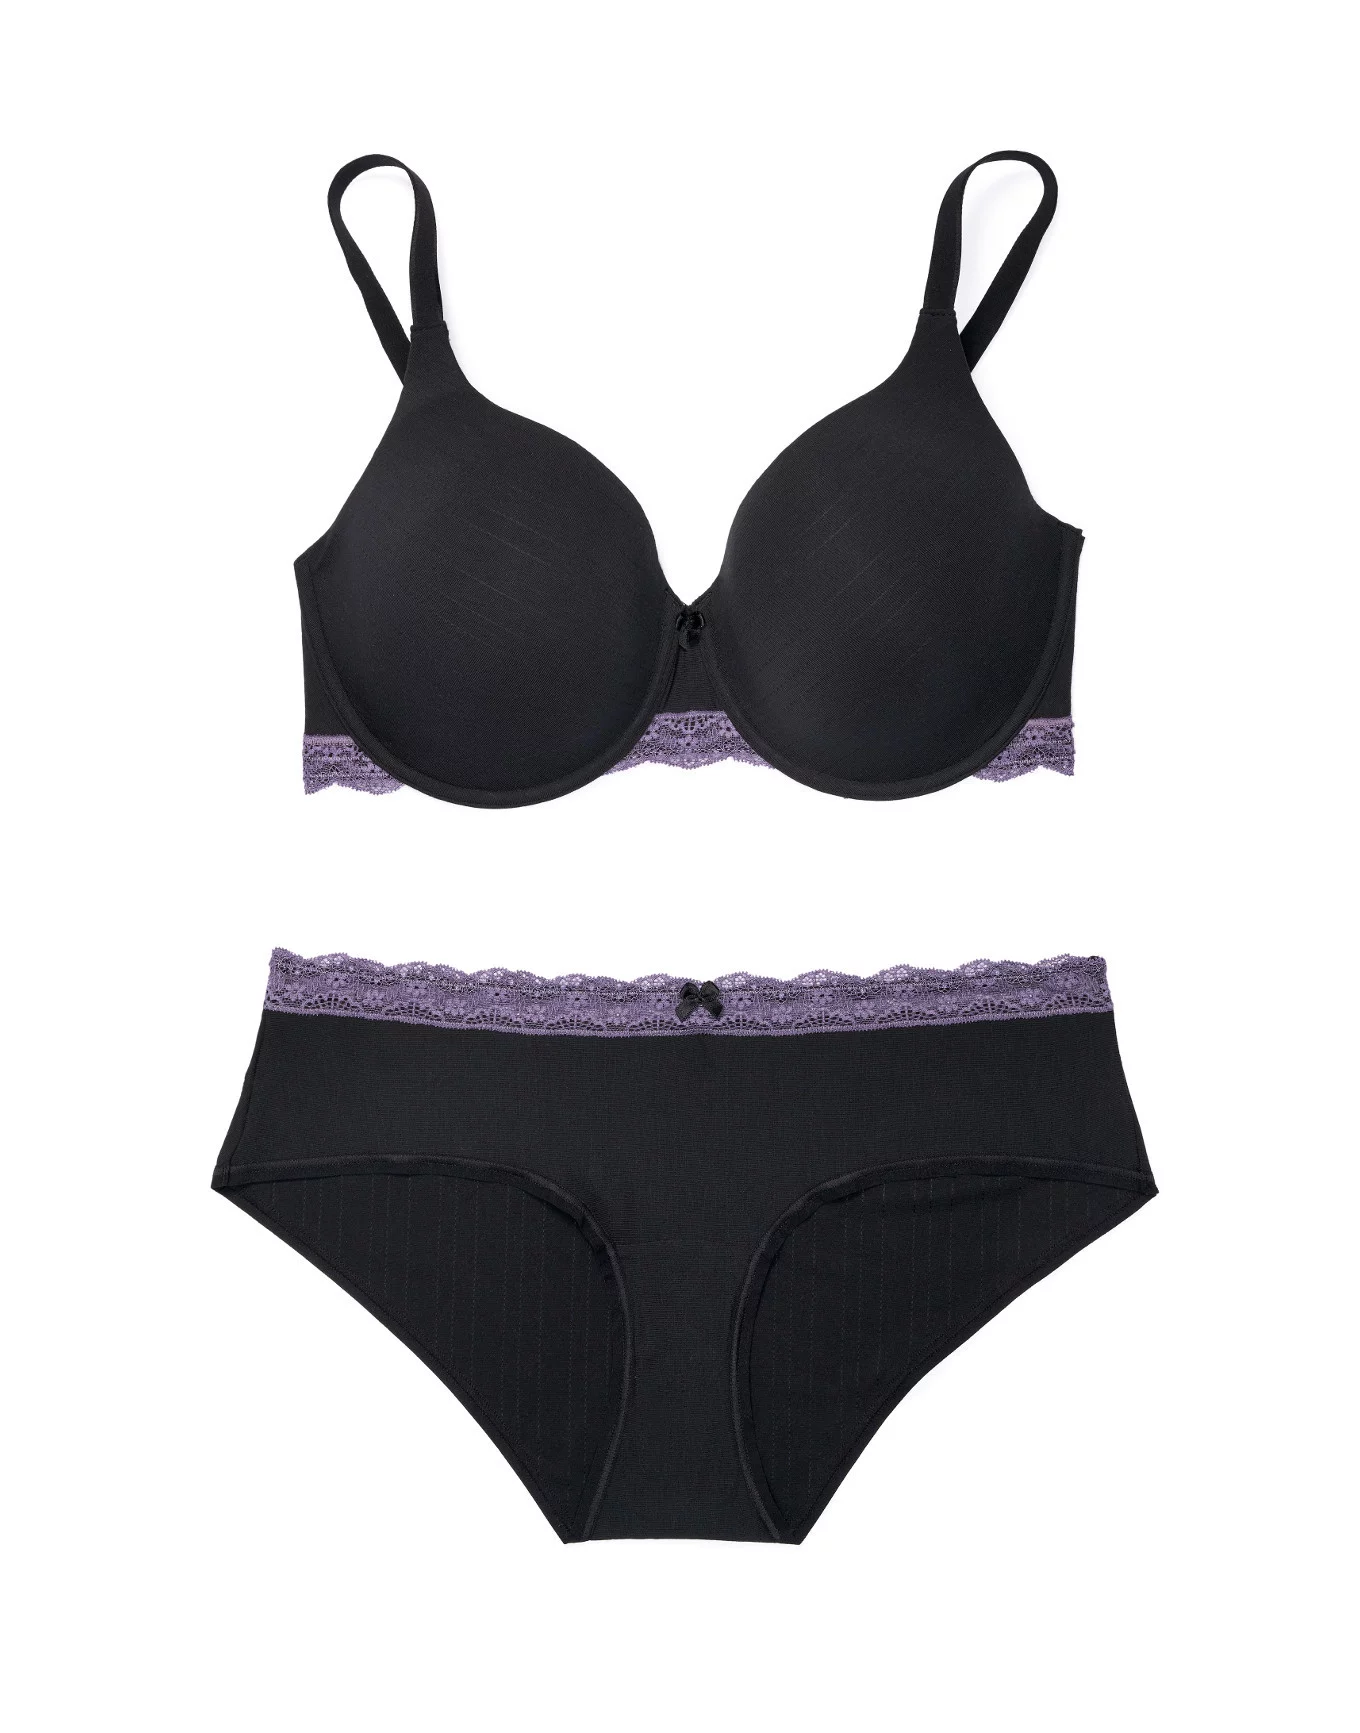 Adore Me, Intimates & Sleepwear, Adore Me Annabelle Underwire Black  Purple Lightly Lined Bra Size 34c